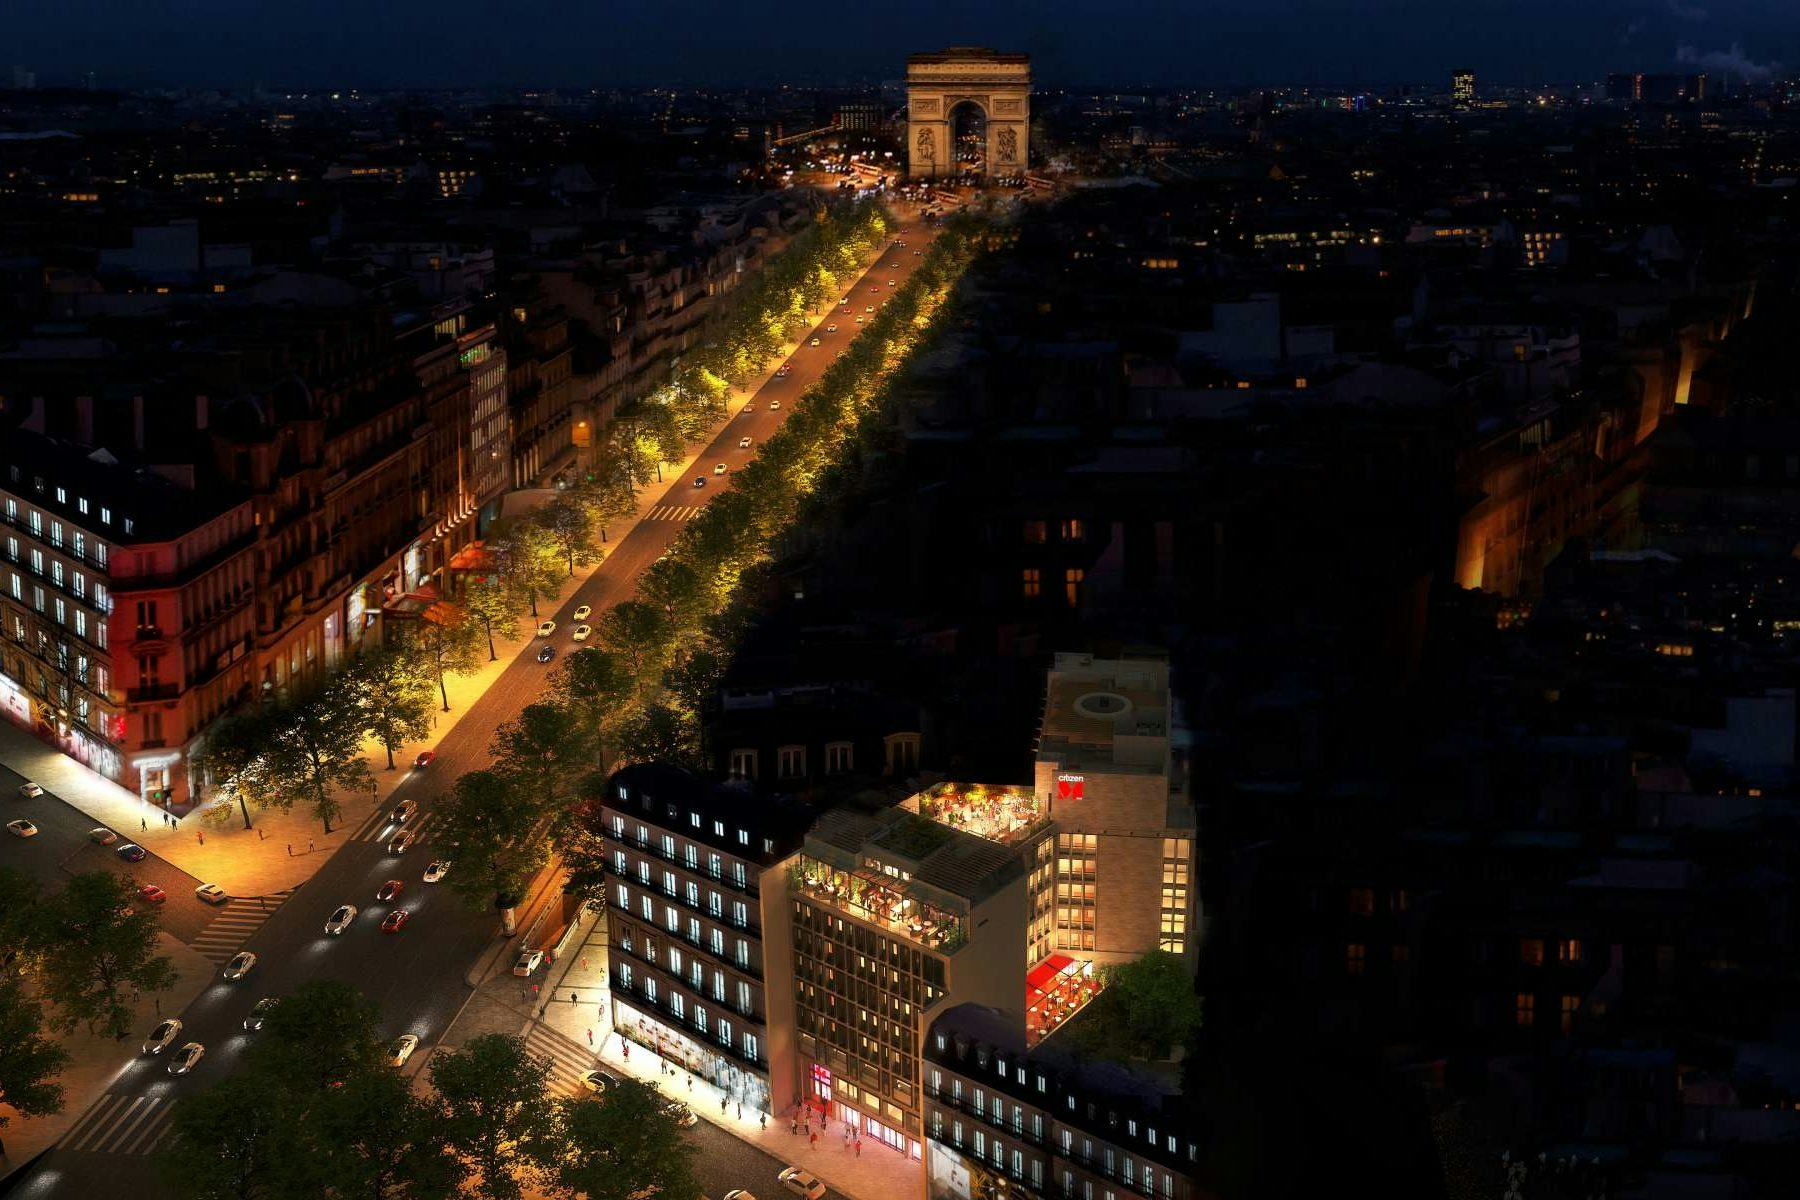 CitizenM opent vierde hotel in Parijs